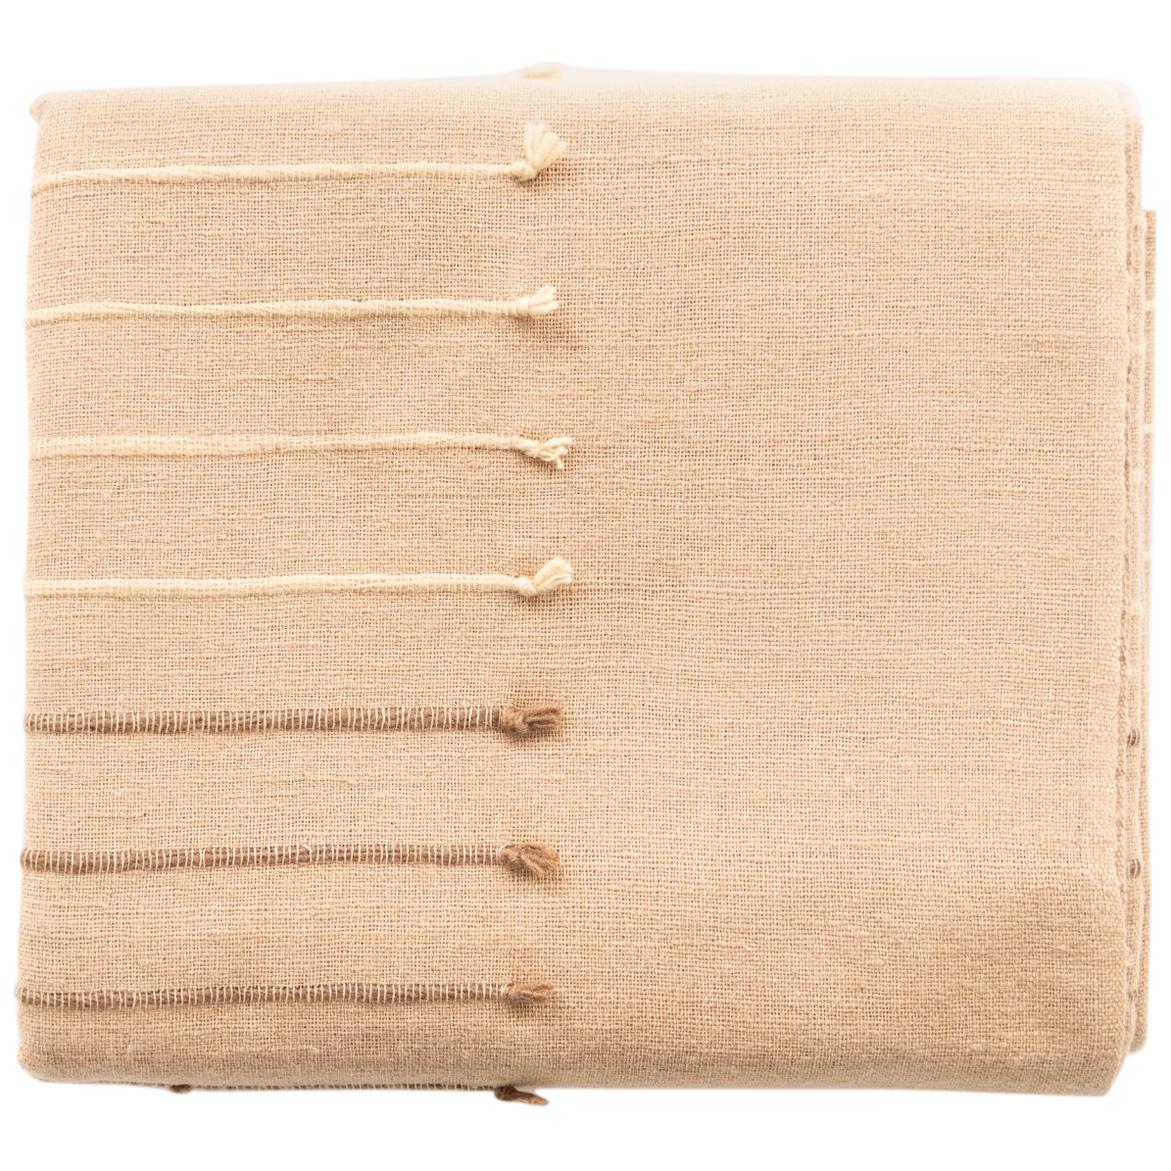 Terra Handloom Merino Throw /  Blanket In Stripes Design, Soft Neutral Color